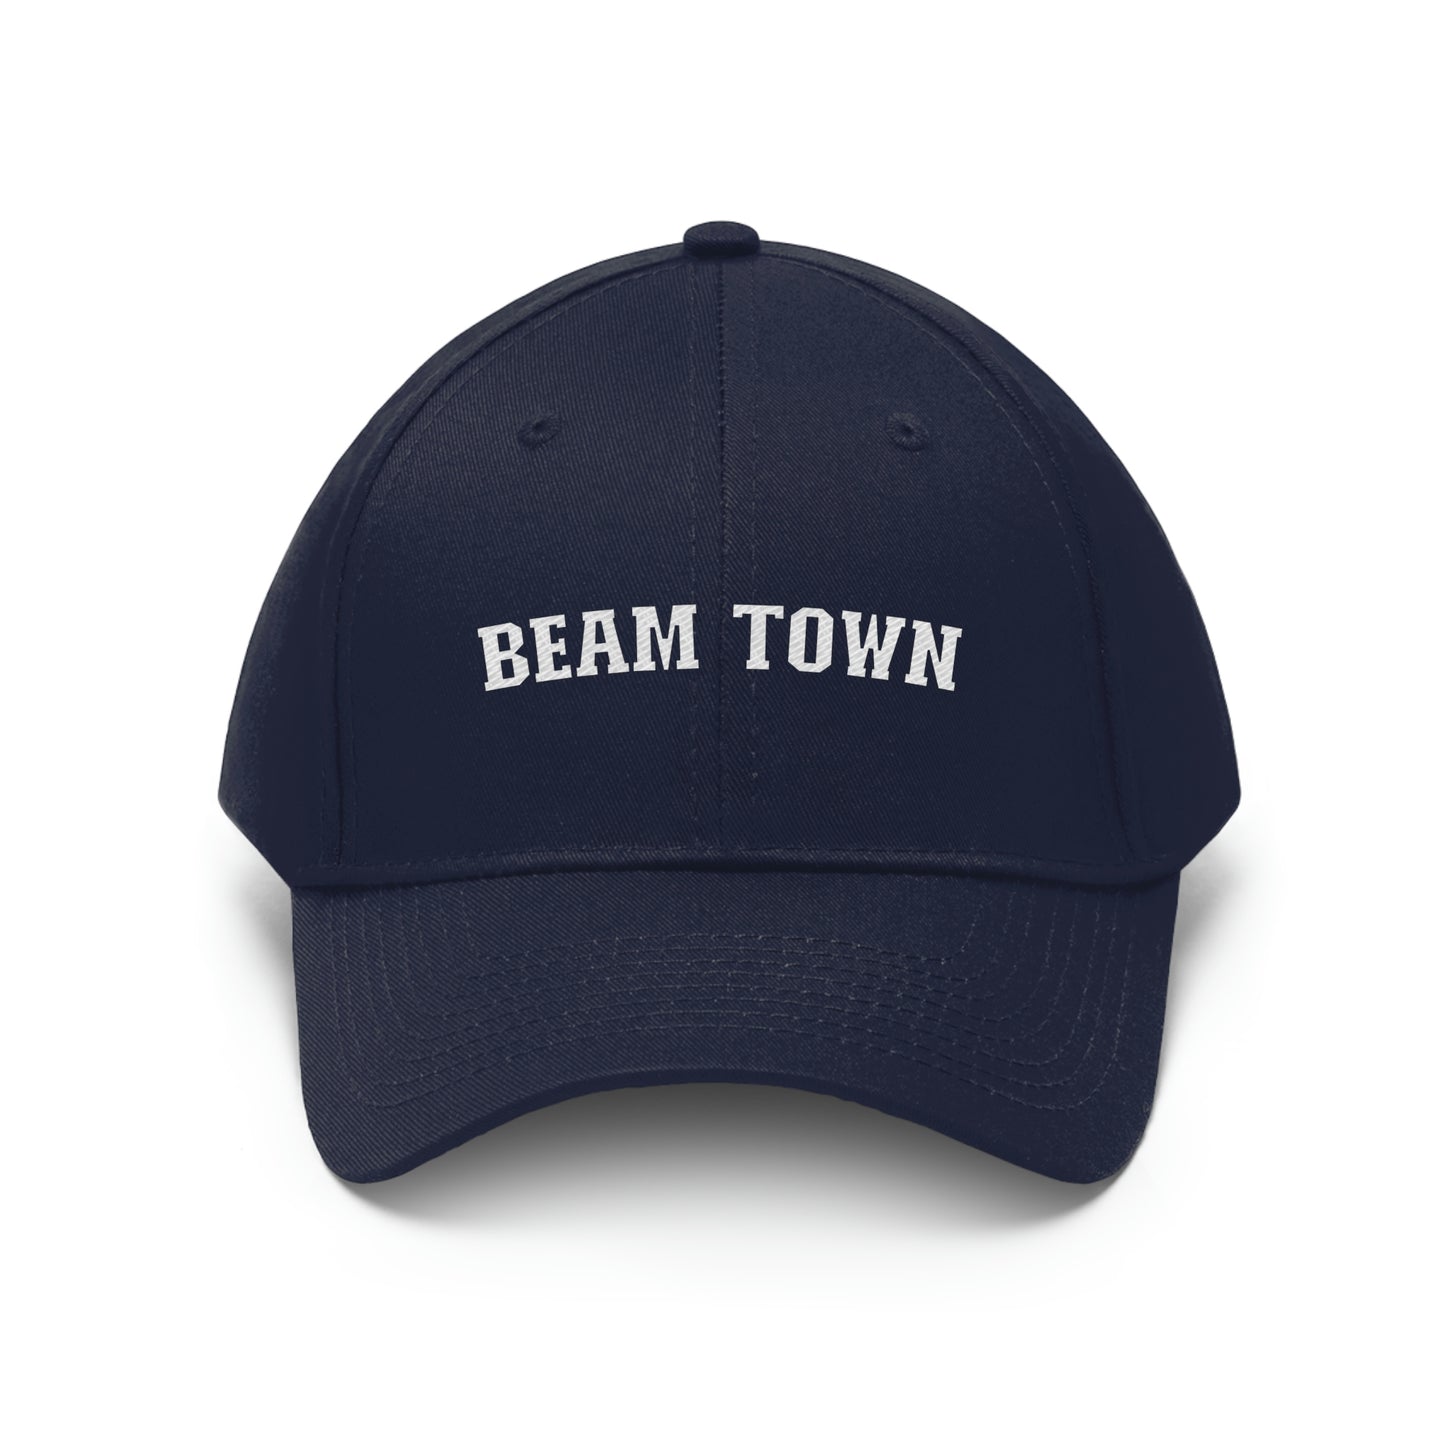 OG Beam Town Embroidered Hat, Embroidered Sacramento Dad Baseball Cap, Sacramento Basketball Team Fan Gift, Gift for Sac Beam Town Fan, Sacramento